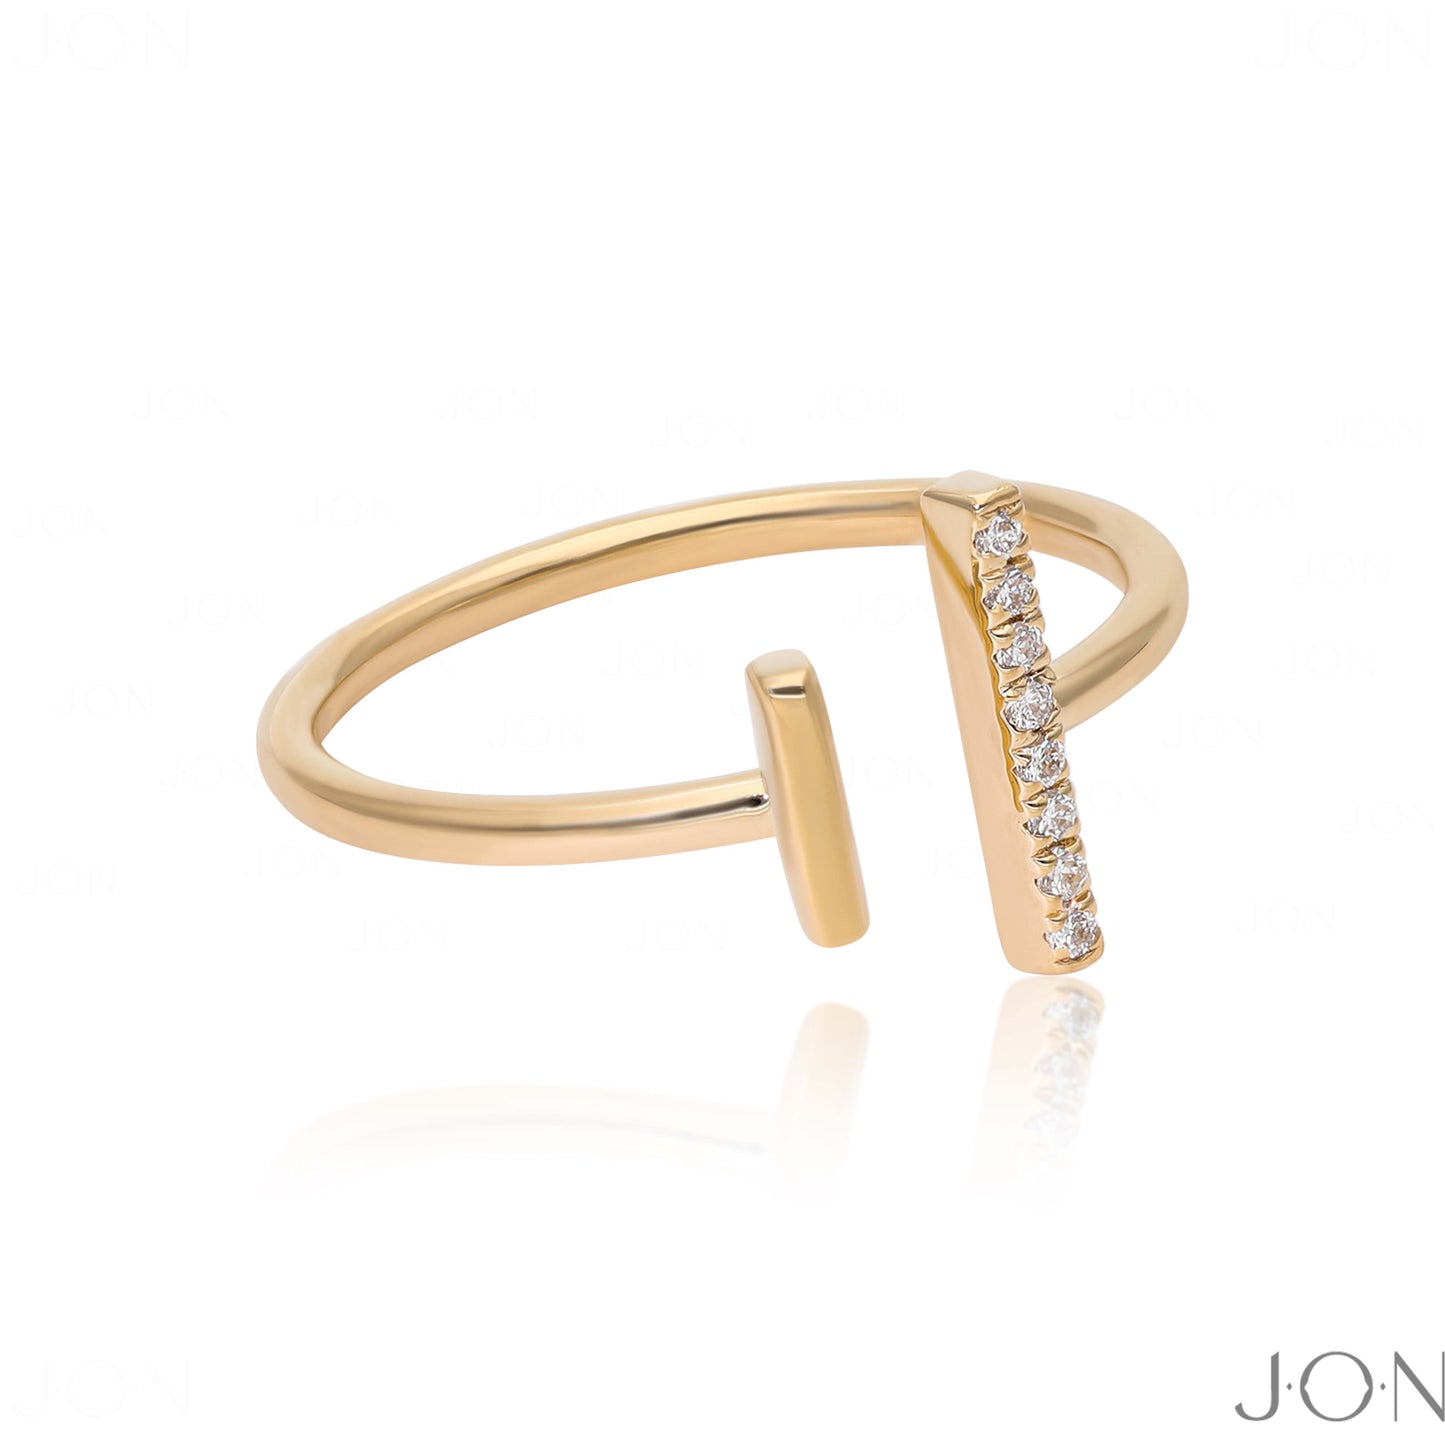 14k Yellow Gold Genuine Diamond Handmade Open Bar Ring Fine Jewelry Size 3 -8 US